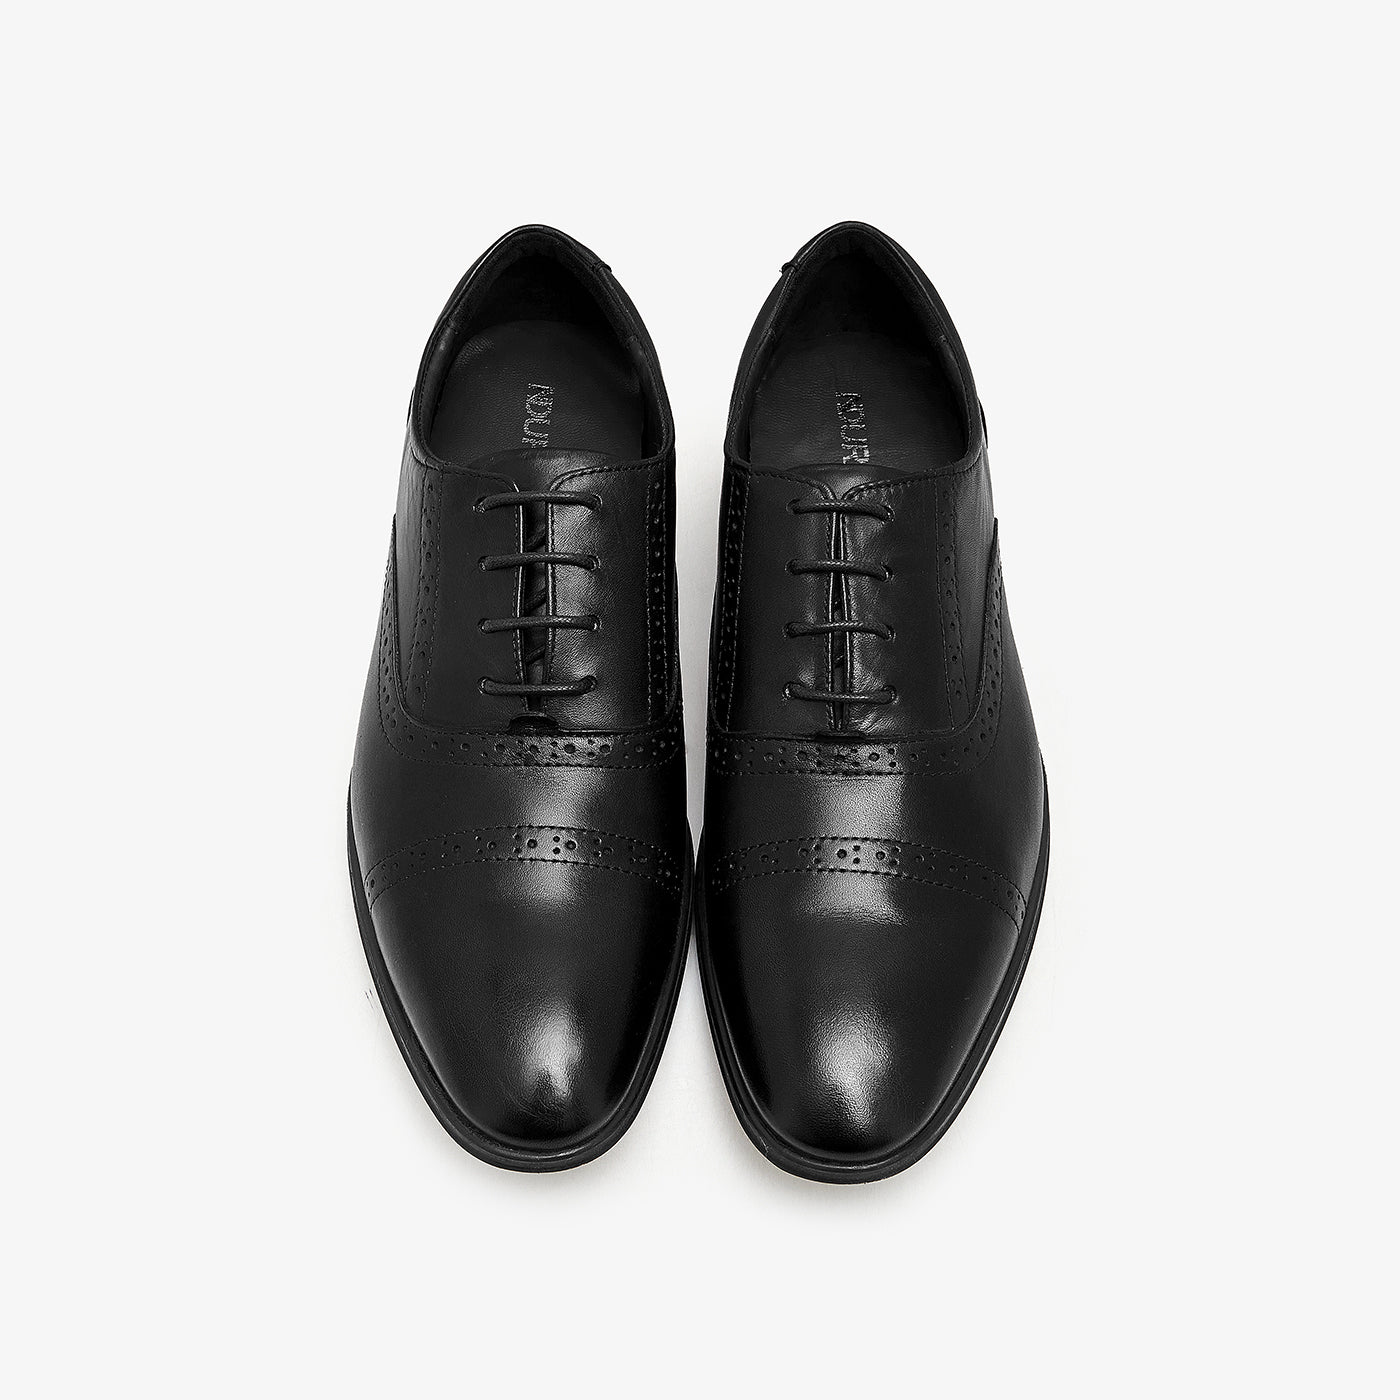 Men's Oxford Brogue Shoes